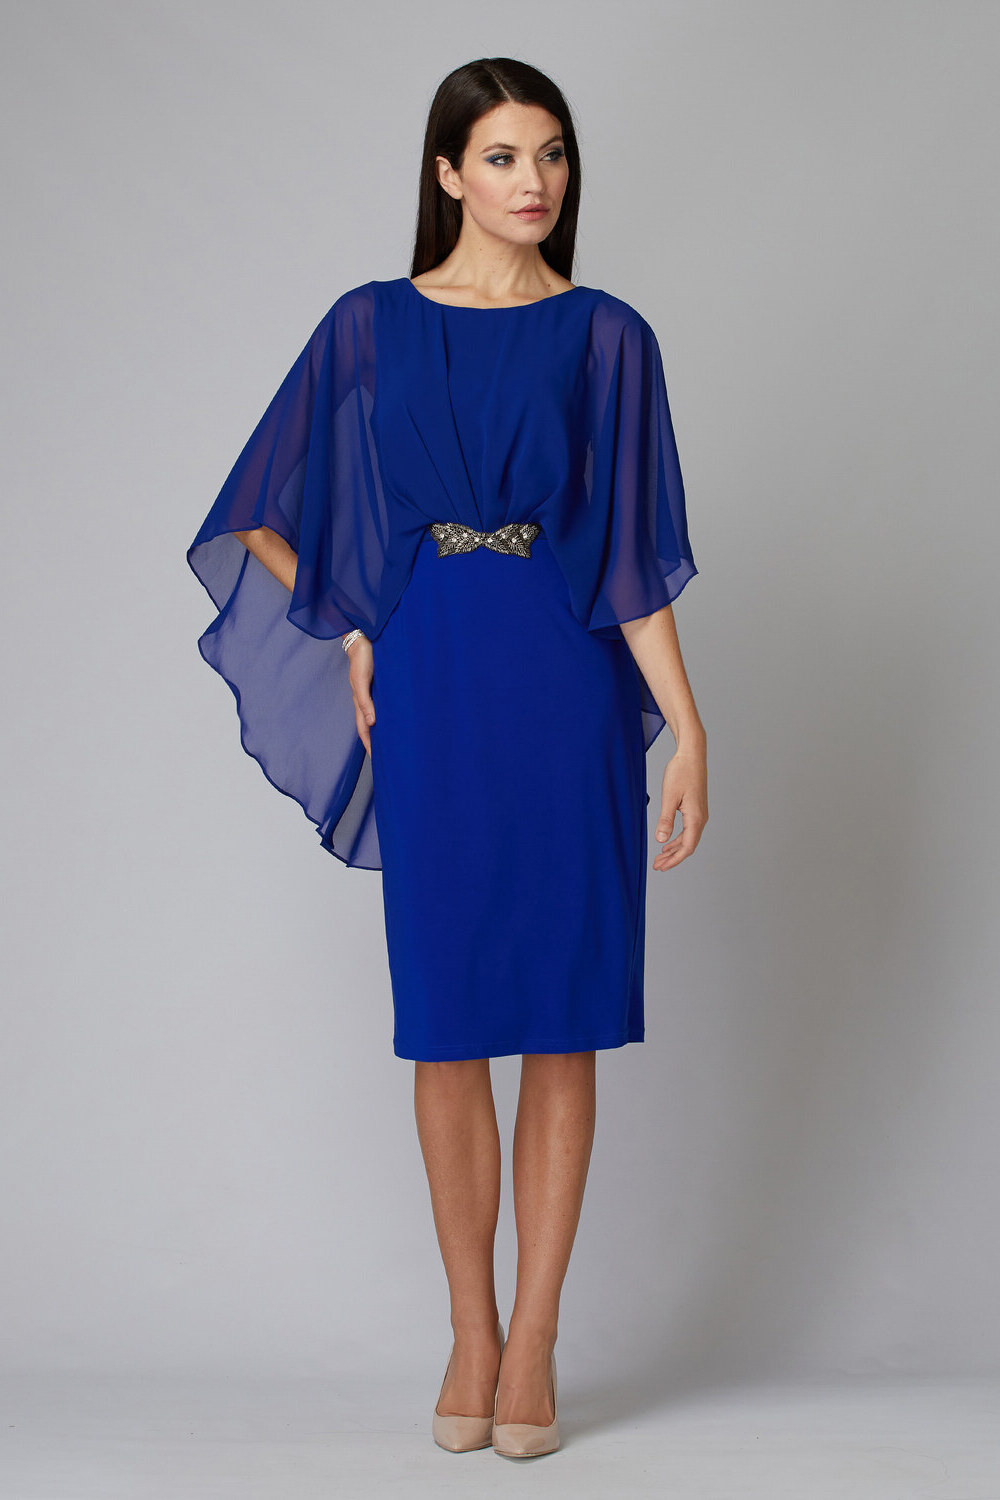 Joseph Ribkoff Dress Style 194208 . Royal Sapphire 163